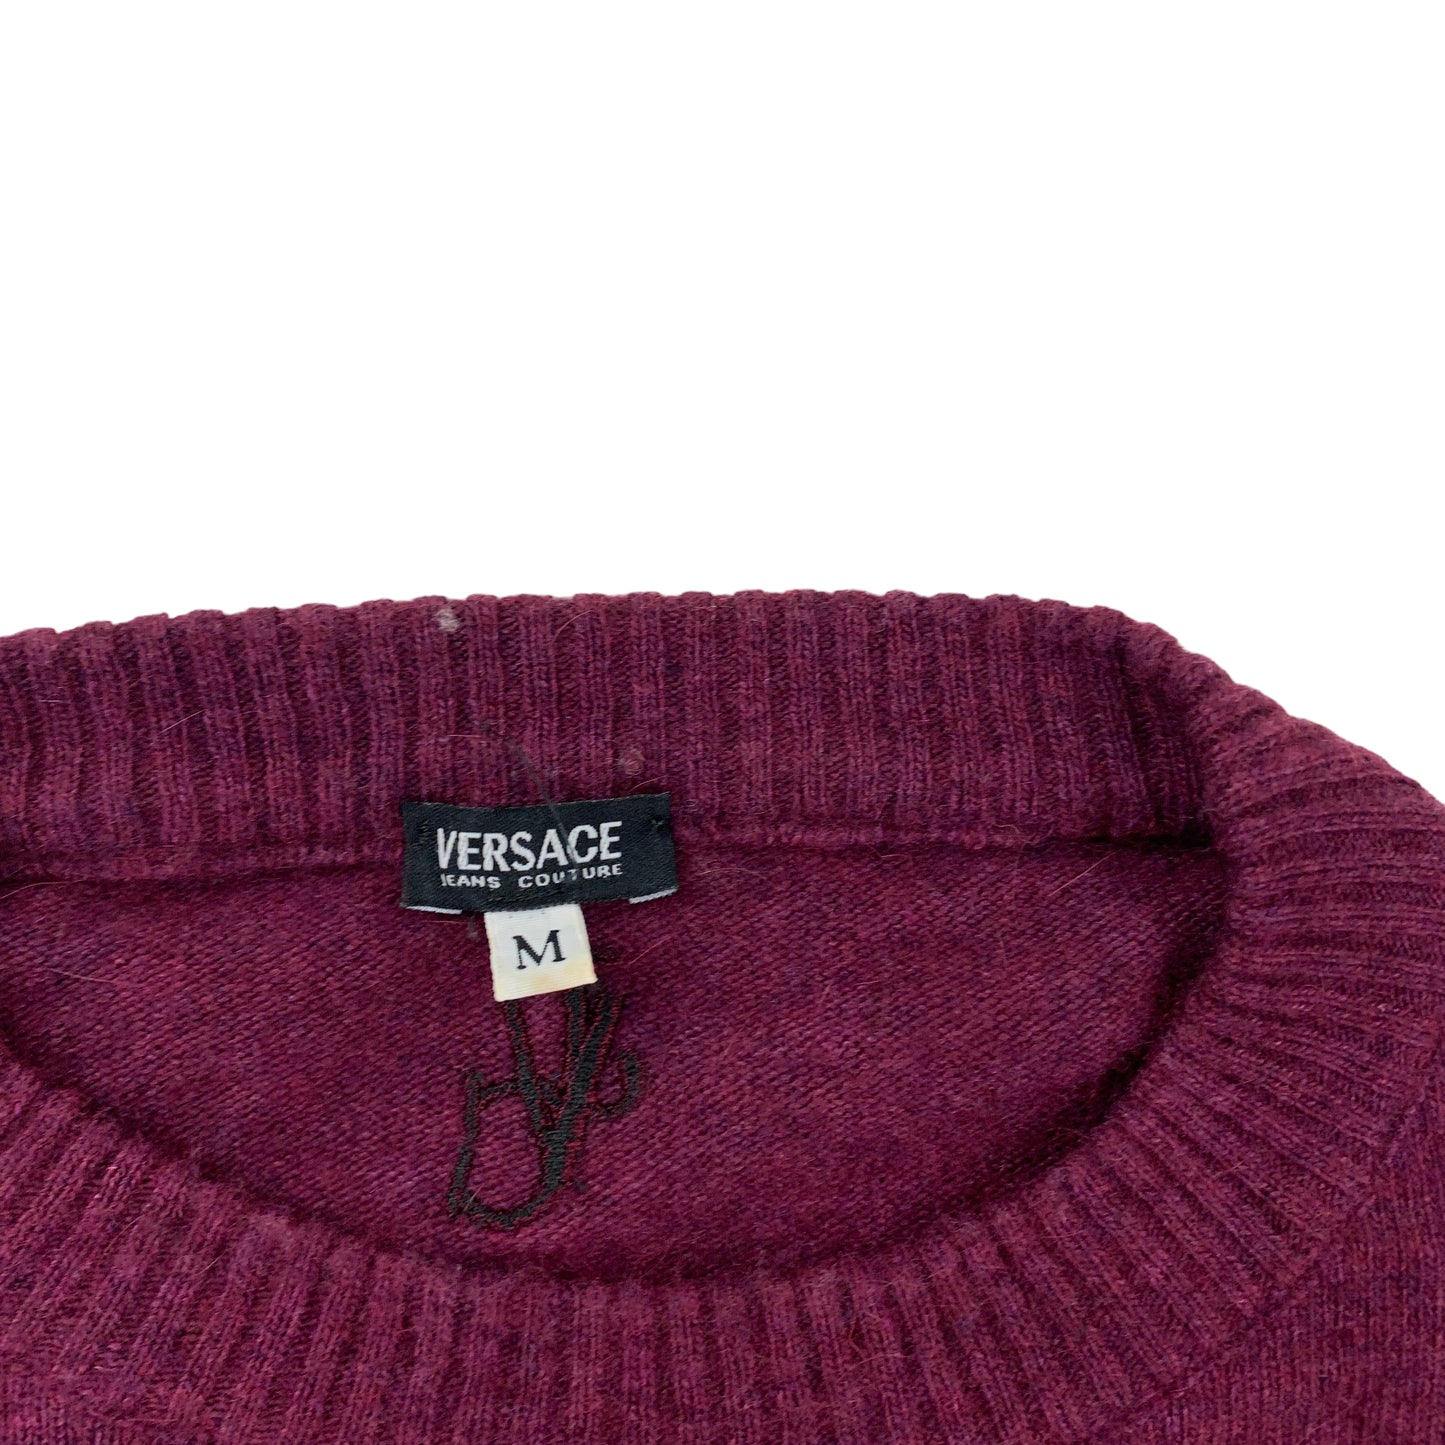 Versace Wool Sweater - M